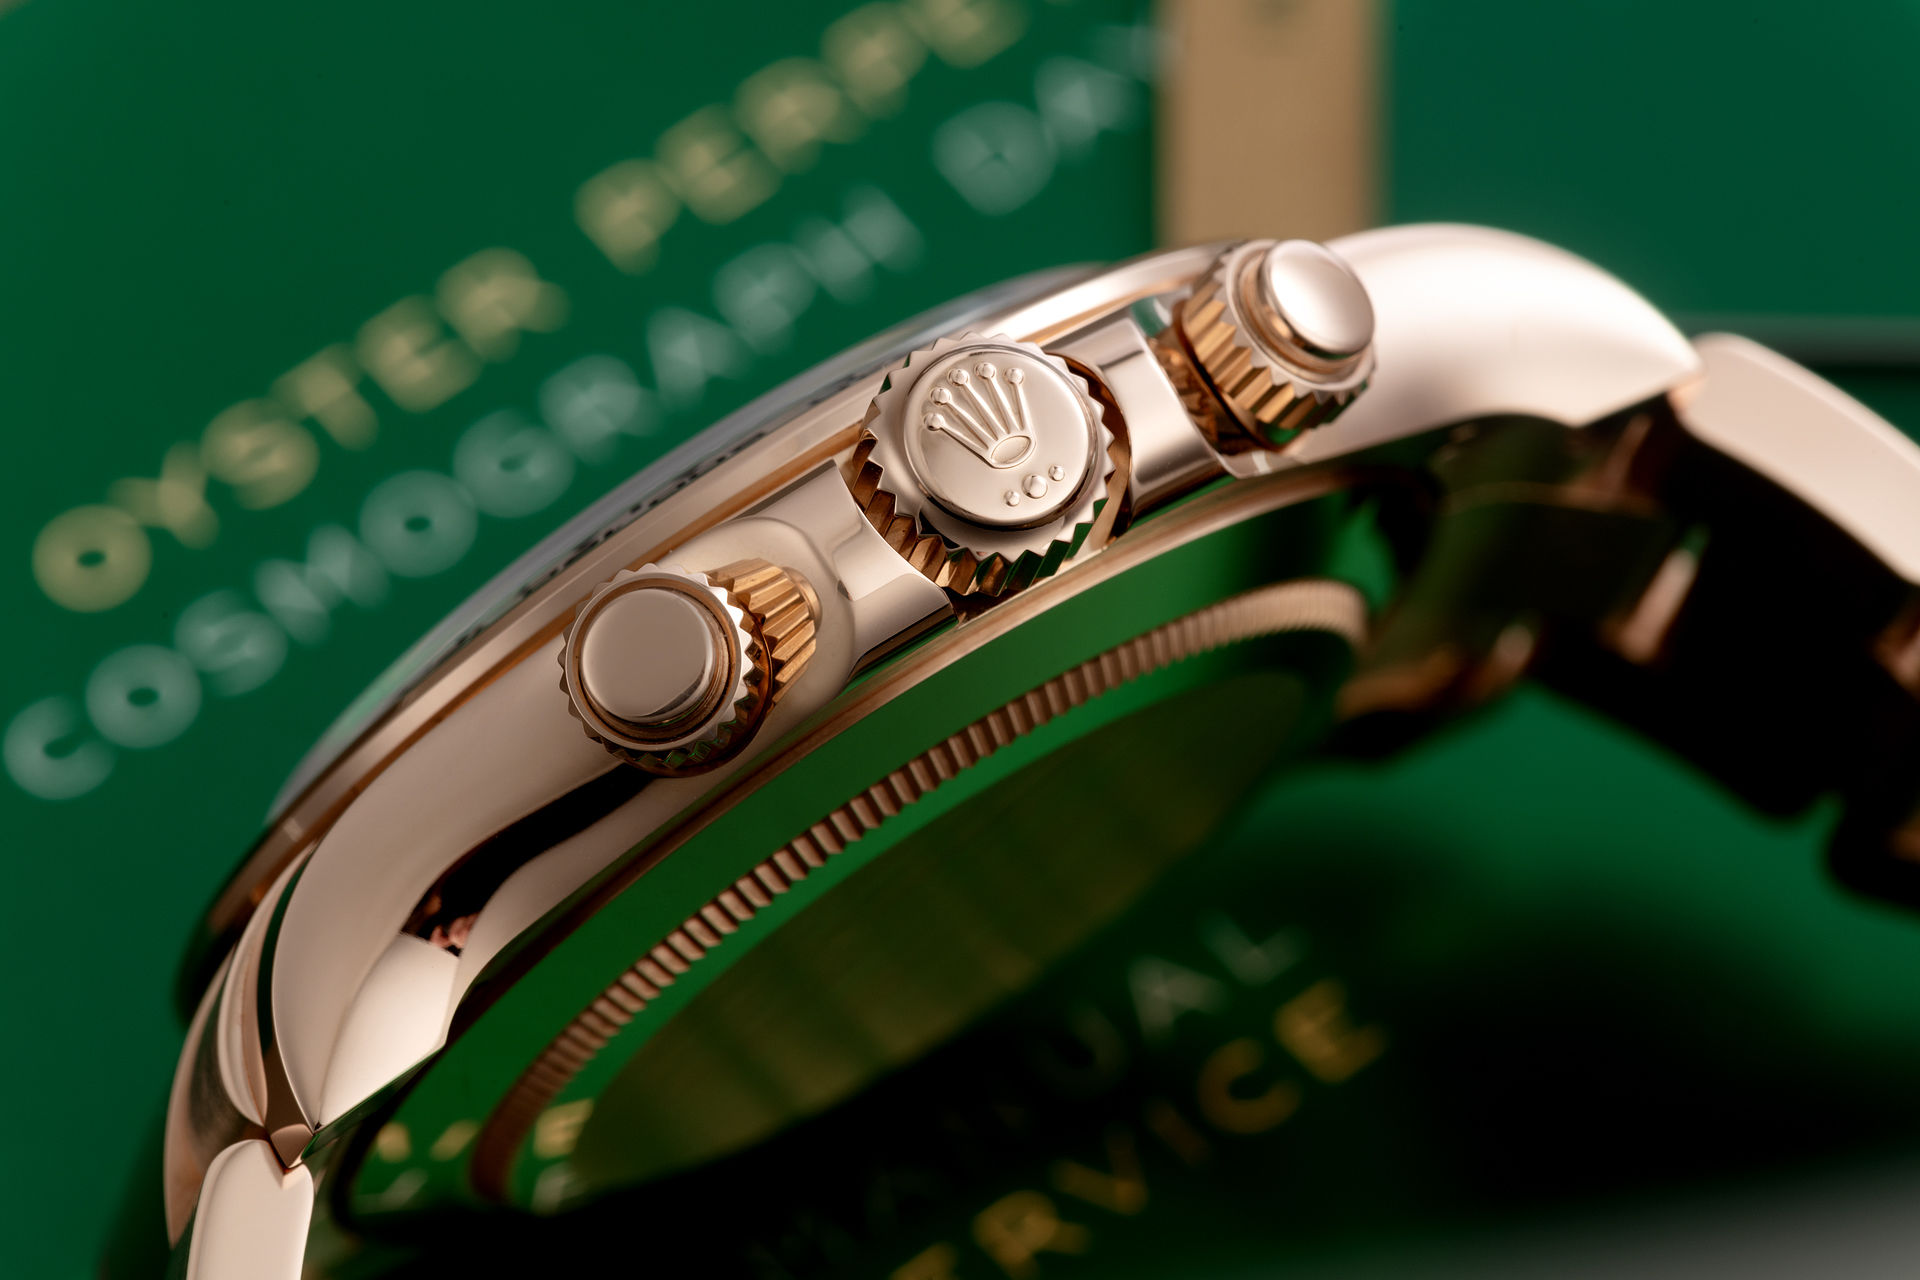 "5 Year Rolex Warranty" | ref 116505 | Rolex Cosmograph Daytona